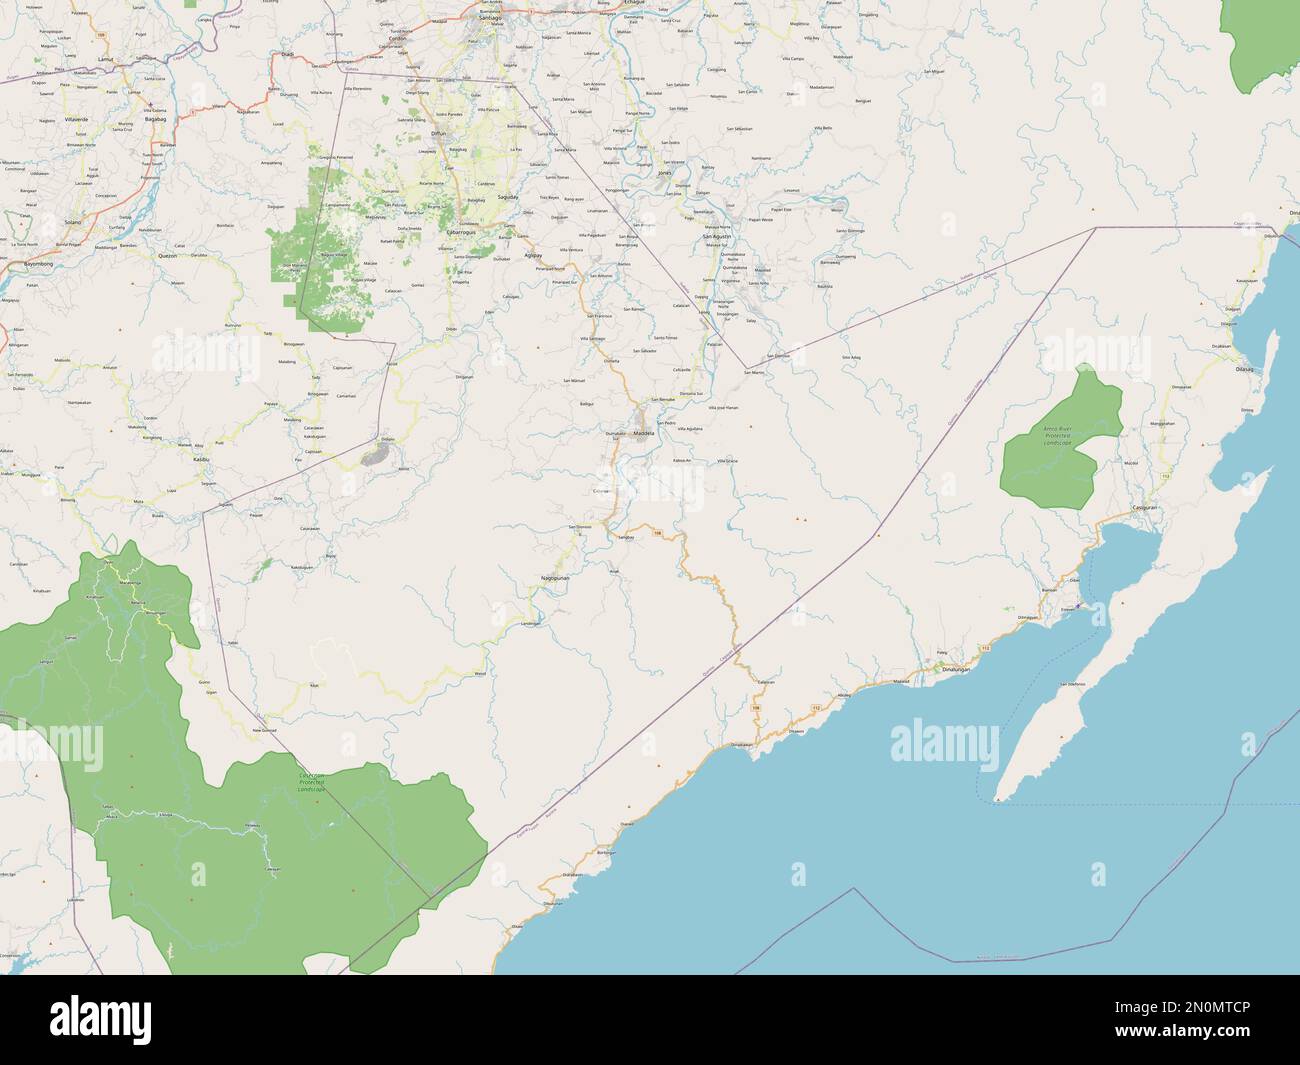 Quirino, province of Philippines. Open Street Map Stock Photo